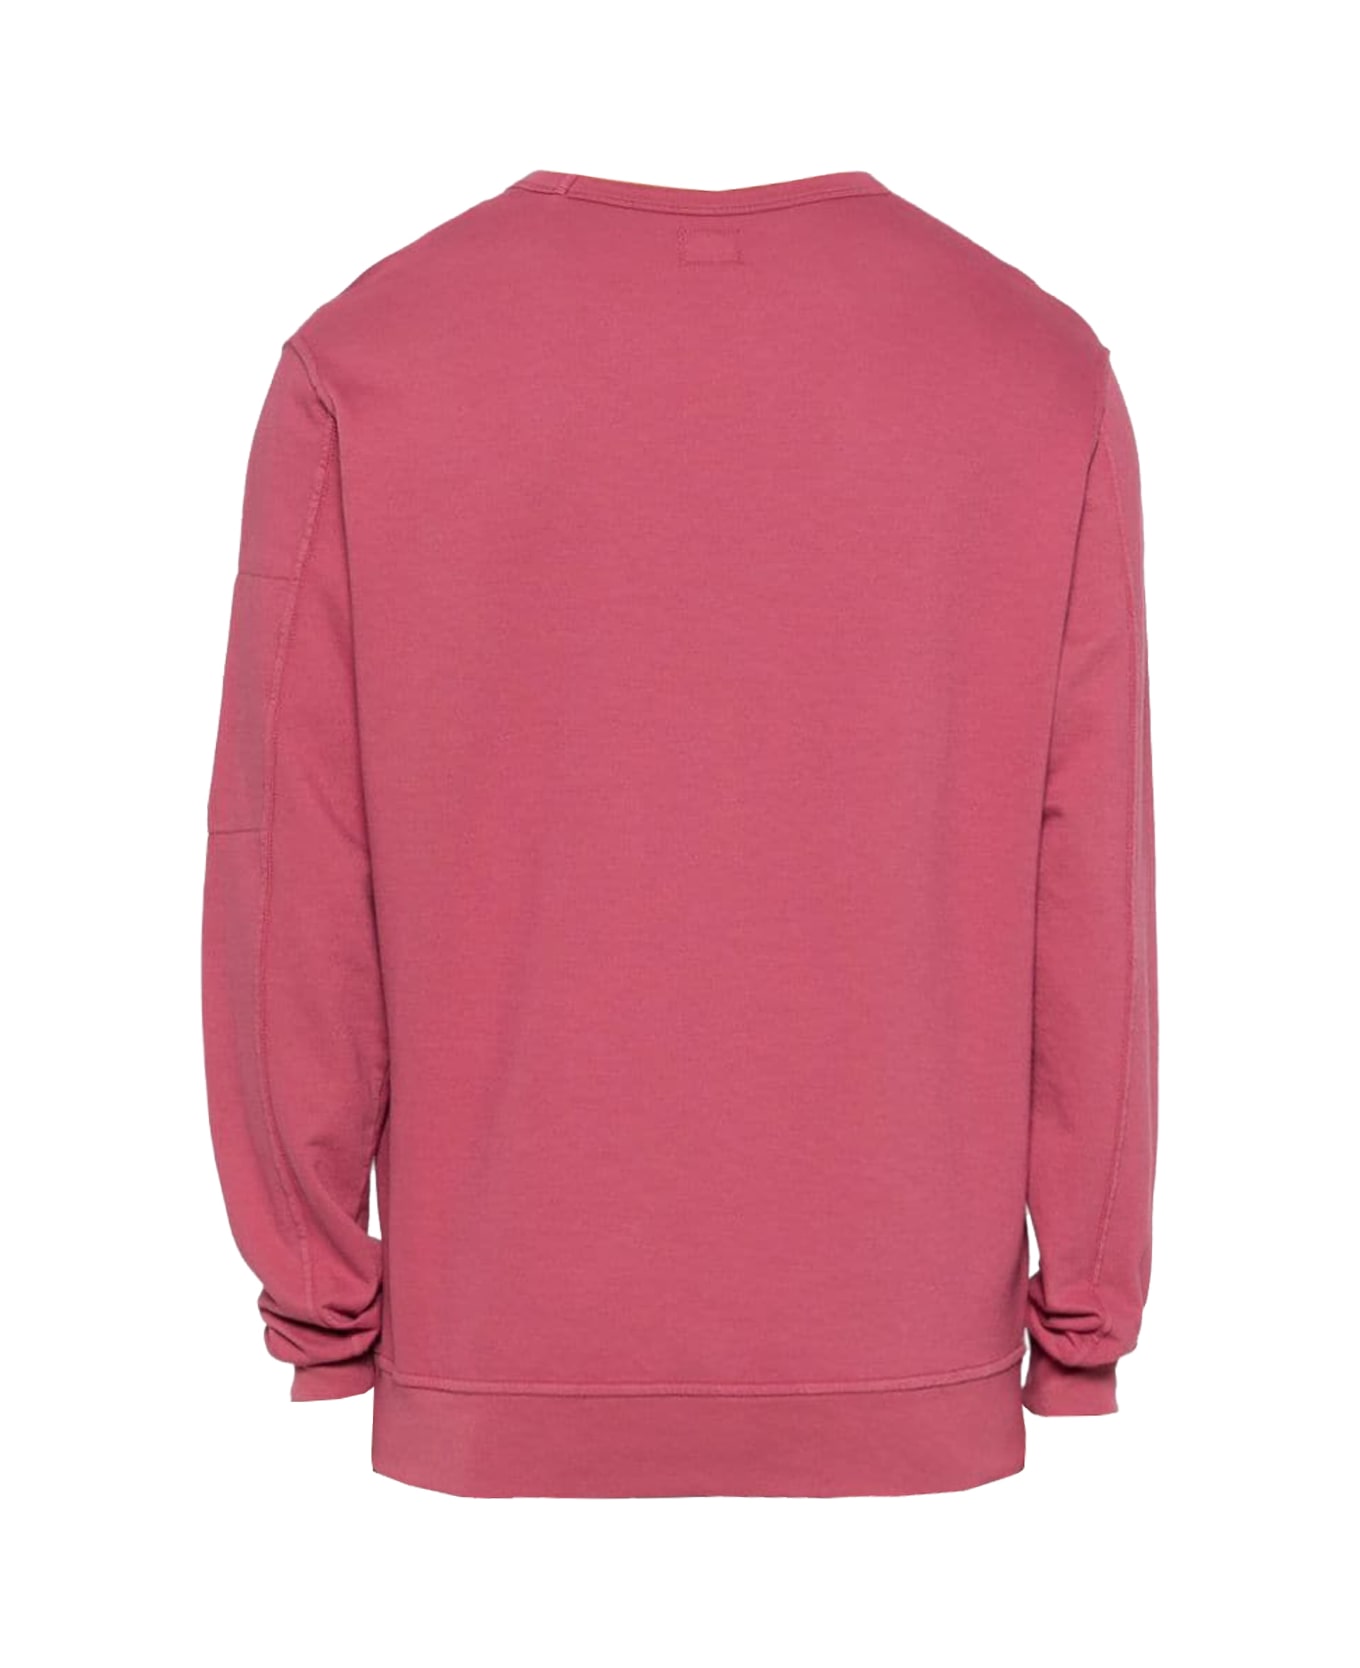 C.P. Company Sweatshirt - RED BUD フリース